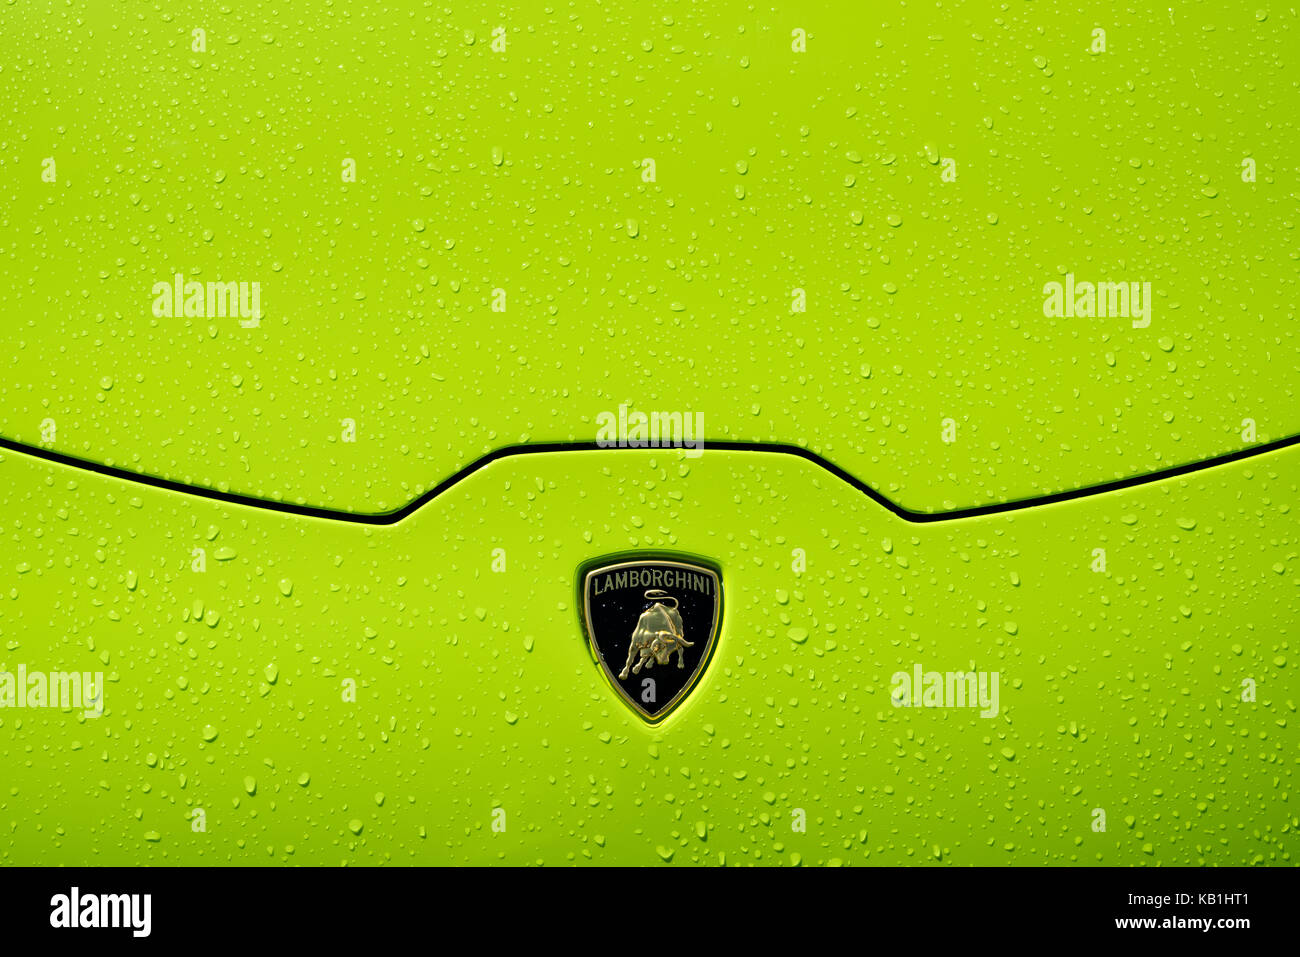 Lamborghini Huracán LP 610-4 bonnet detail with badge, lime green paintwork and raindrops. Stock Photo